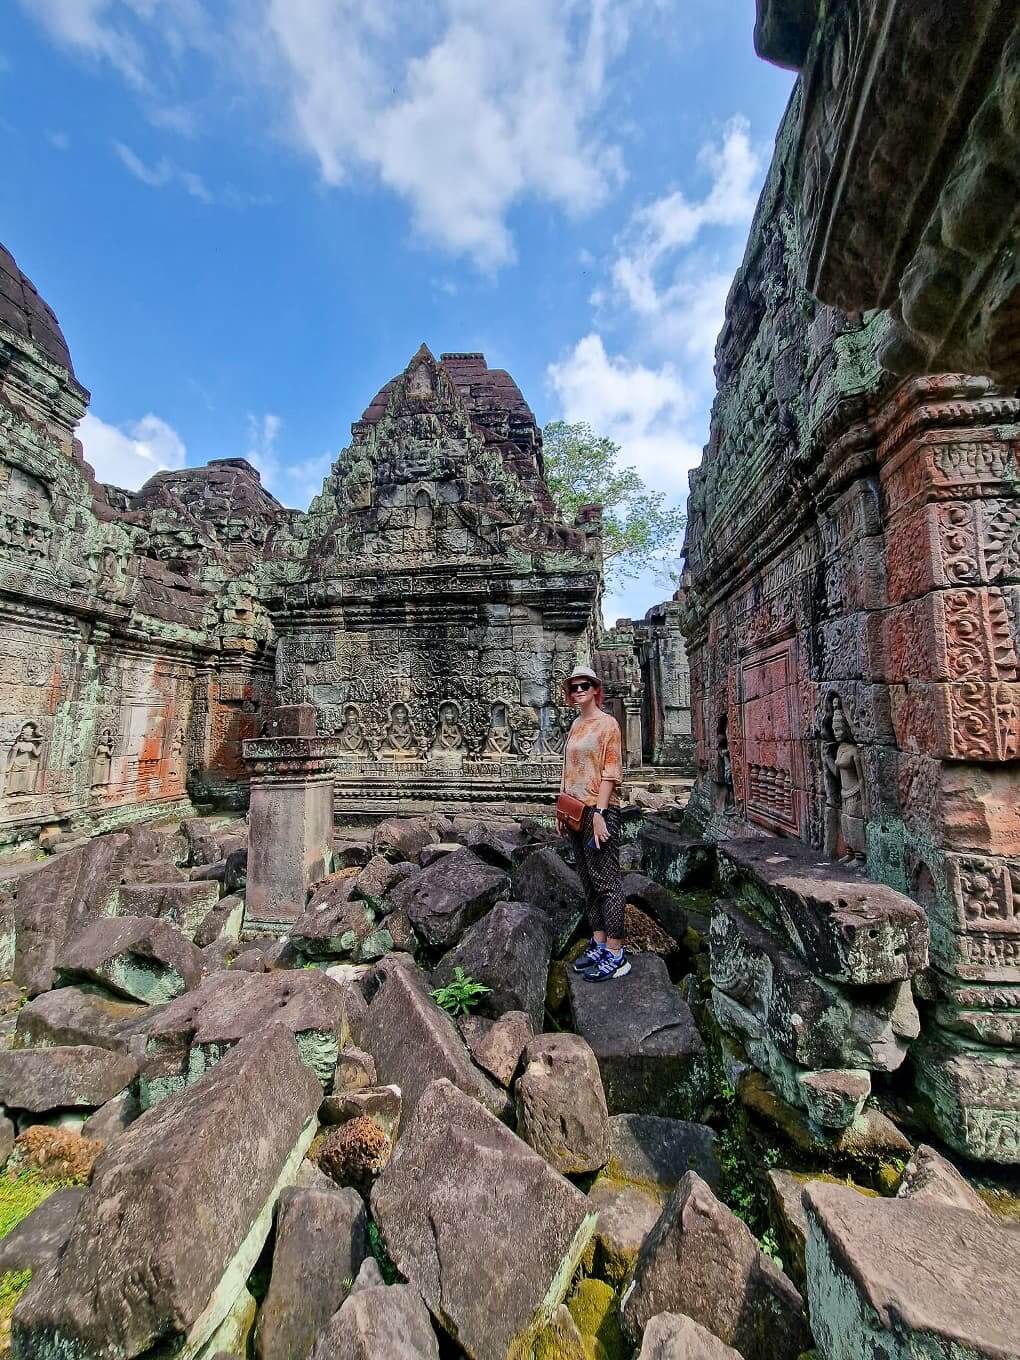 cambodia-itinerary-8-days-siem-reap-angkor-wat-2.jpeg